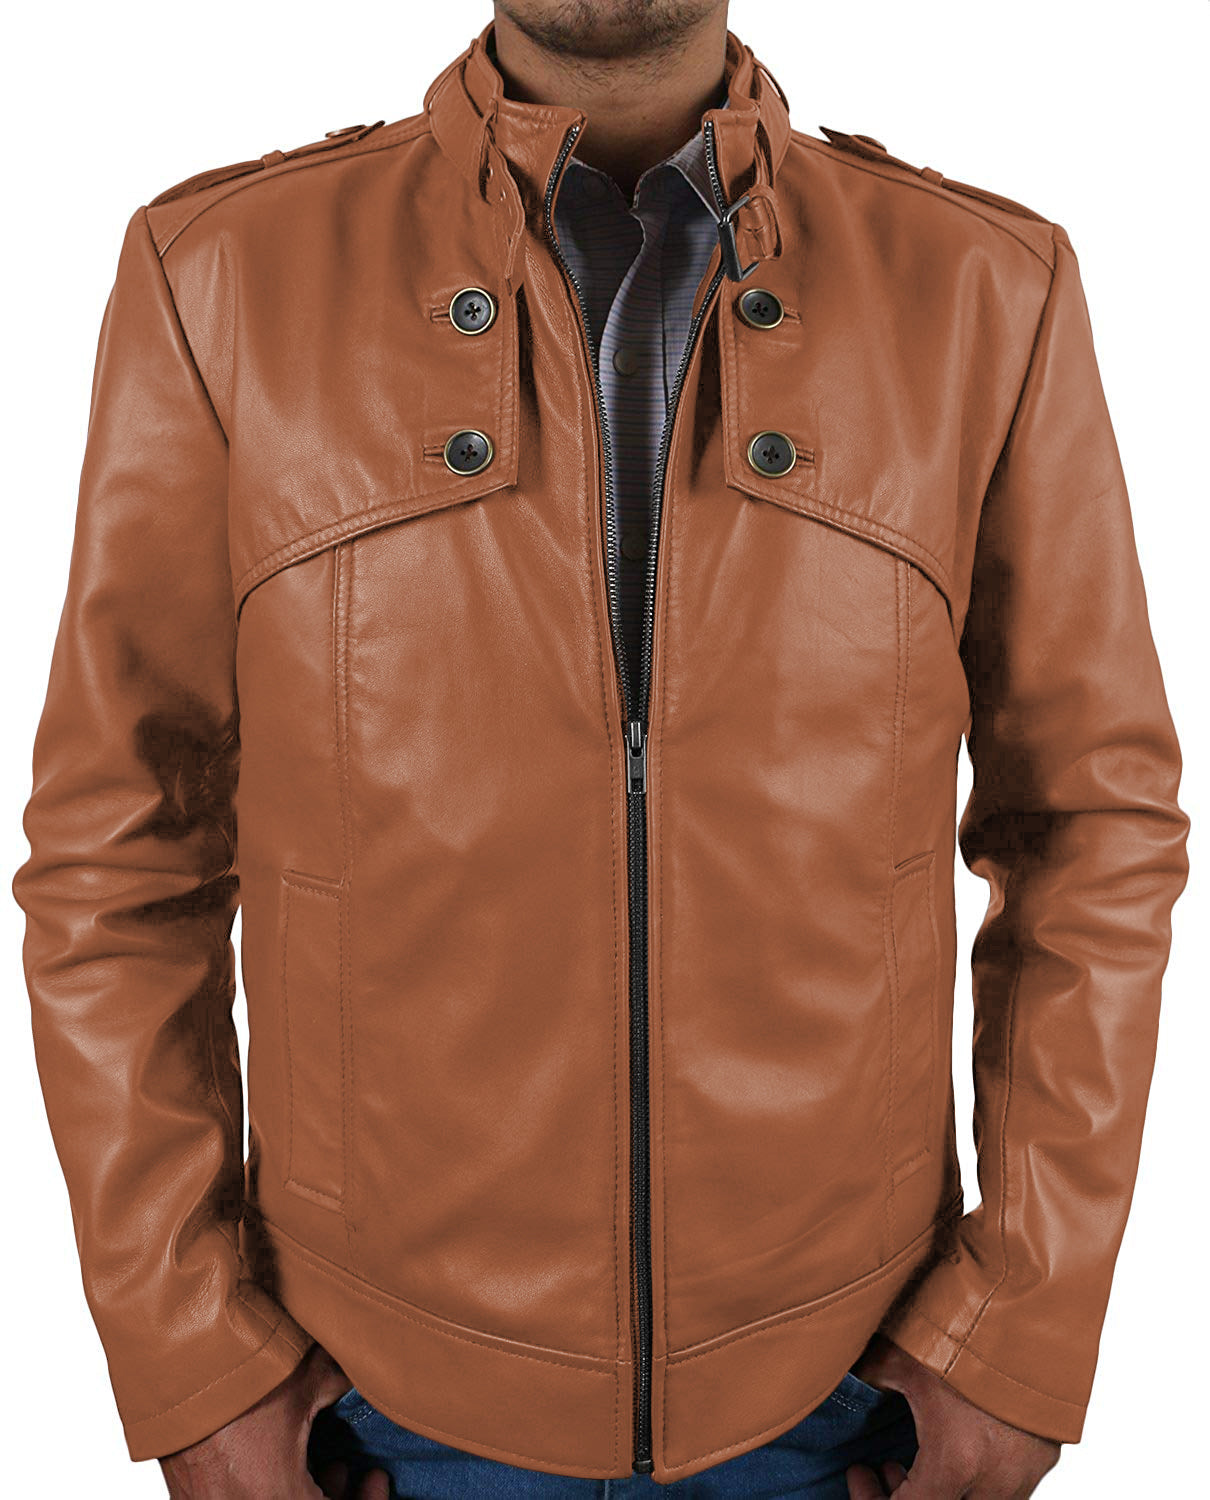 Leather Jackets Hub Mens Genuine Lambskin Leather Jacket (Black, Fencing Jacket) - 1501303